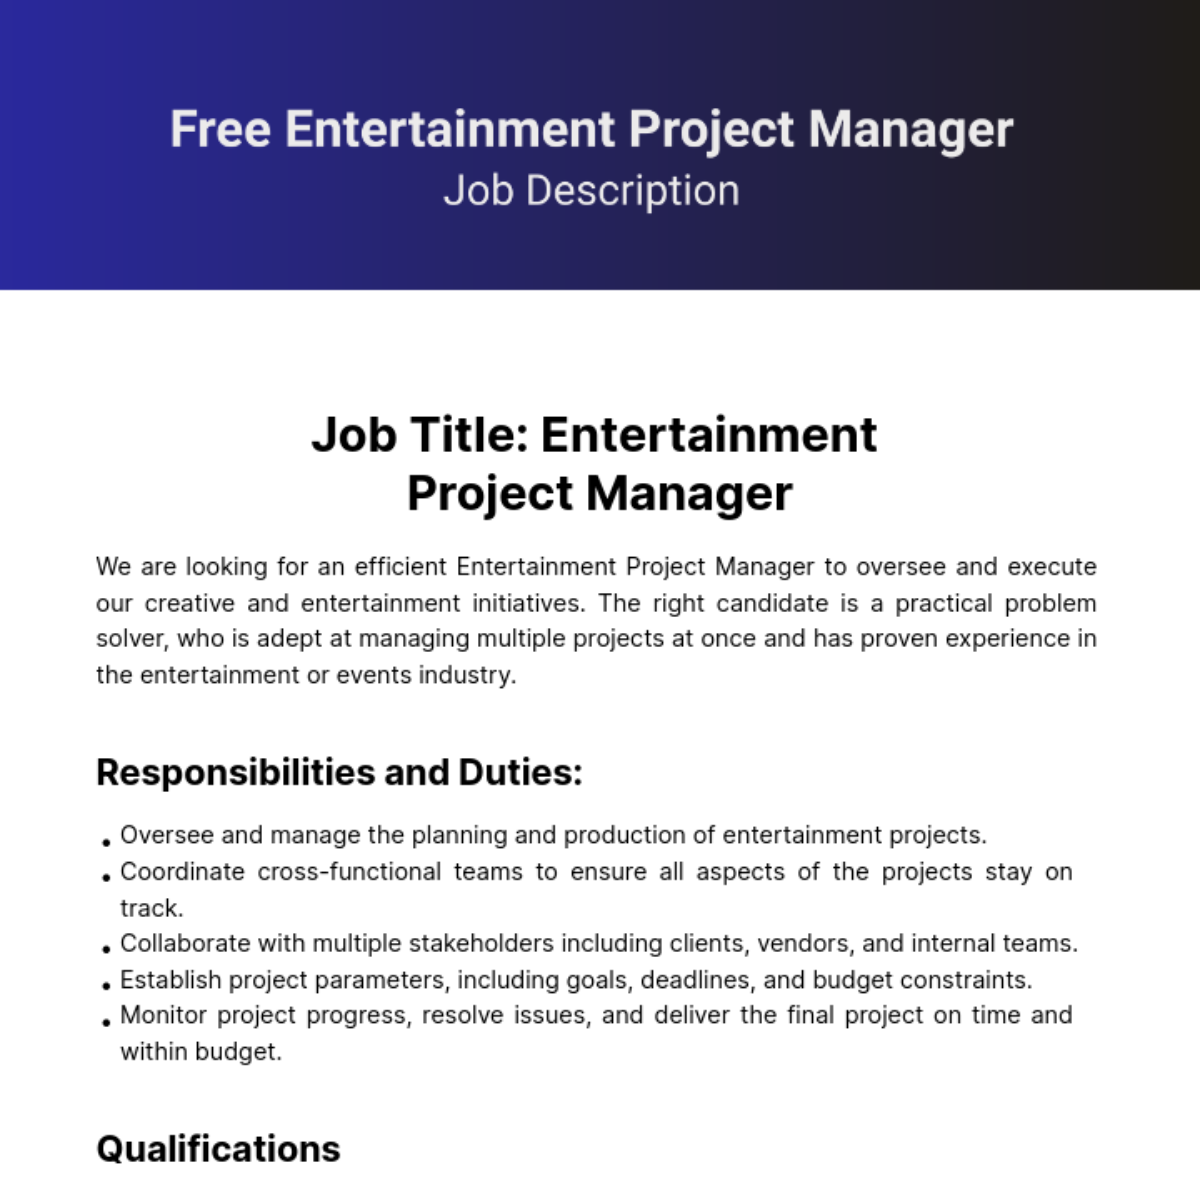 Free Entertainment Project Manager Job Description Template